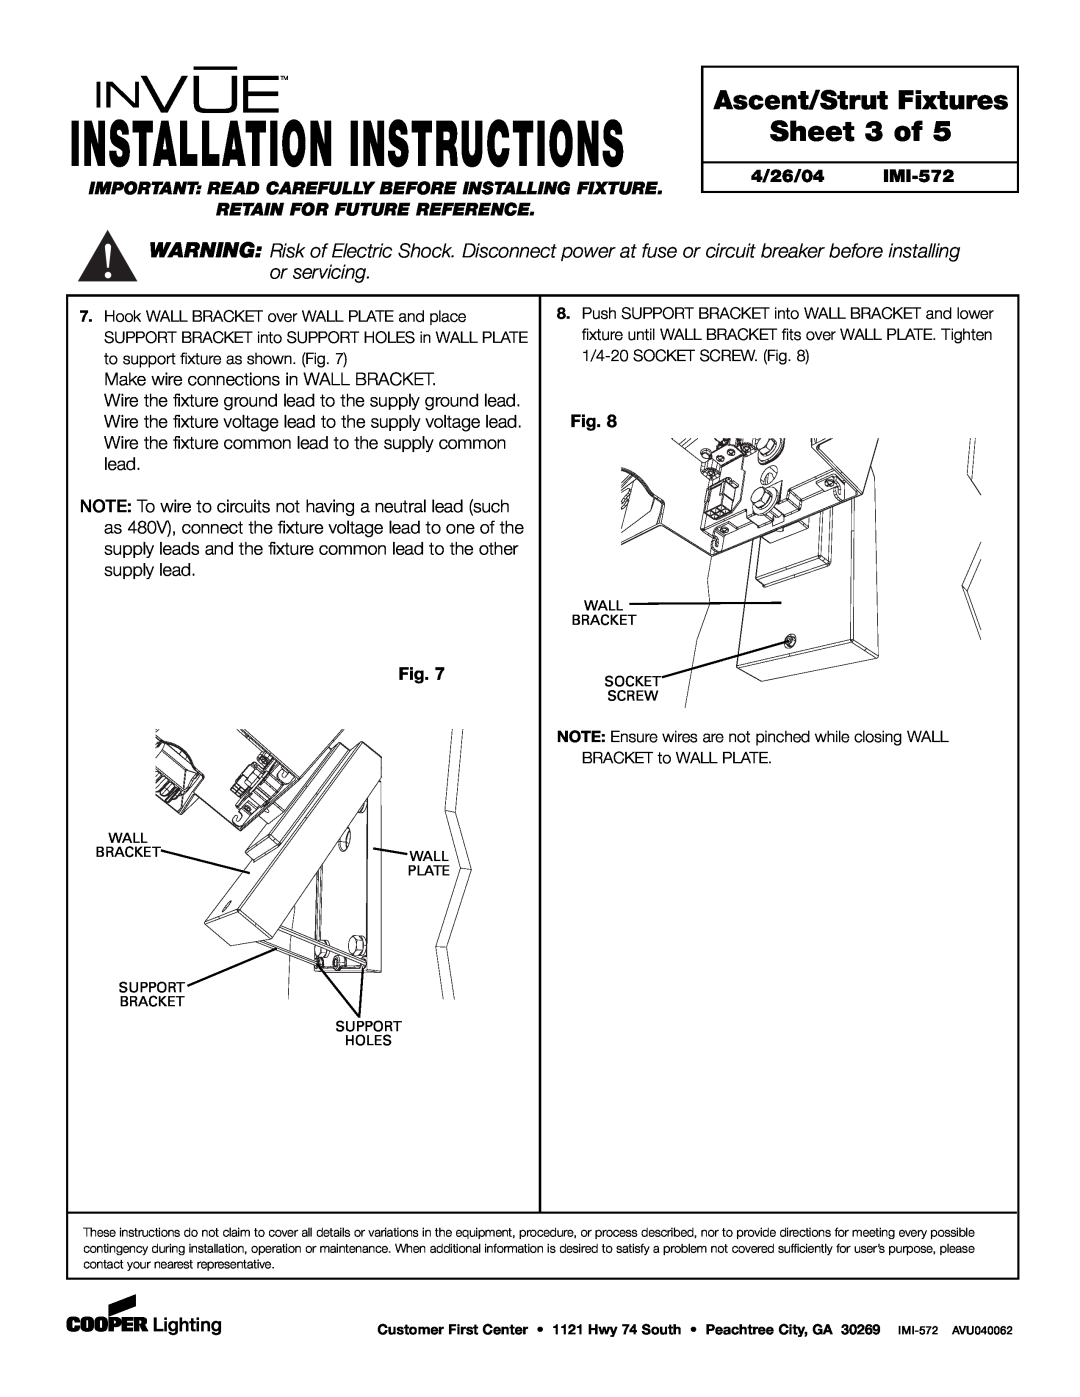 Cooper Lighting installation instructions Sheet 3 of, Installation Instructions, Ascent/Strut Fixtures, 4/26/04 IMI-572 